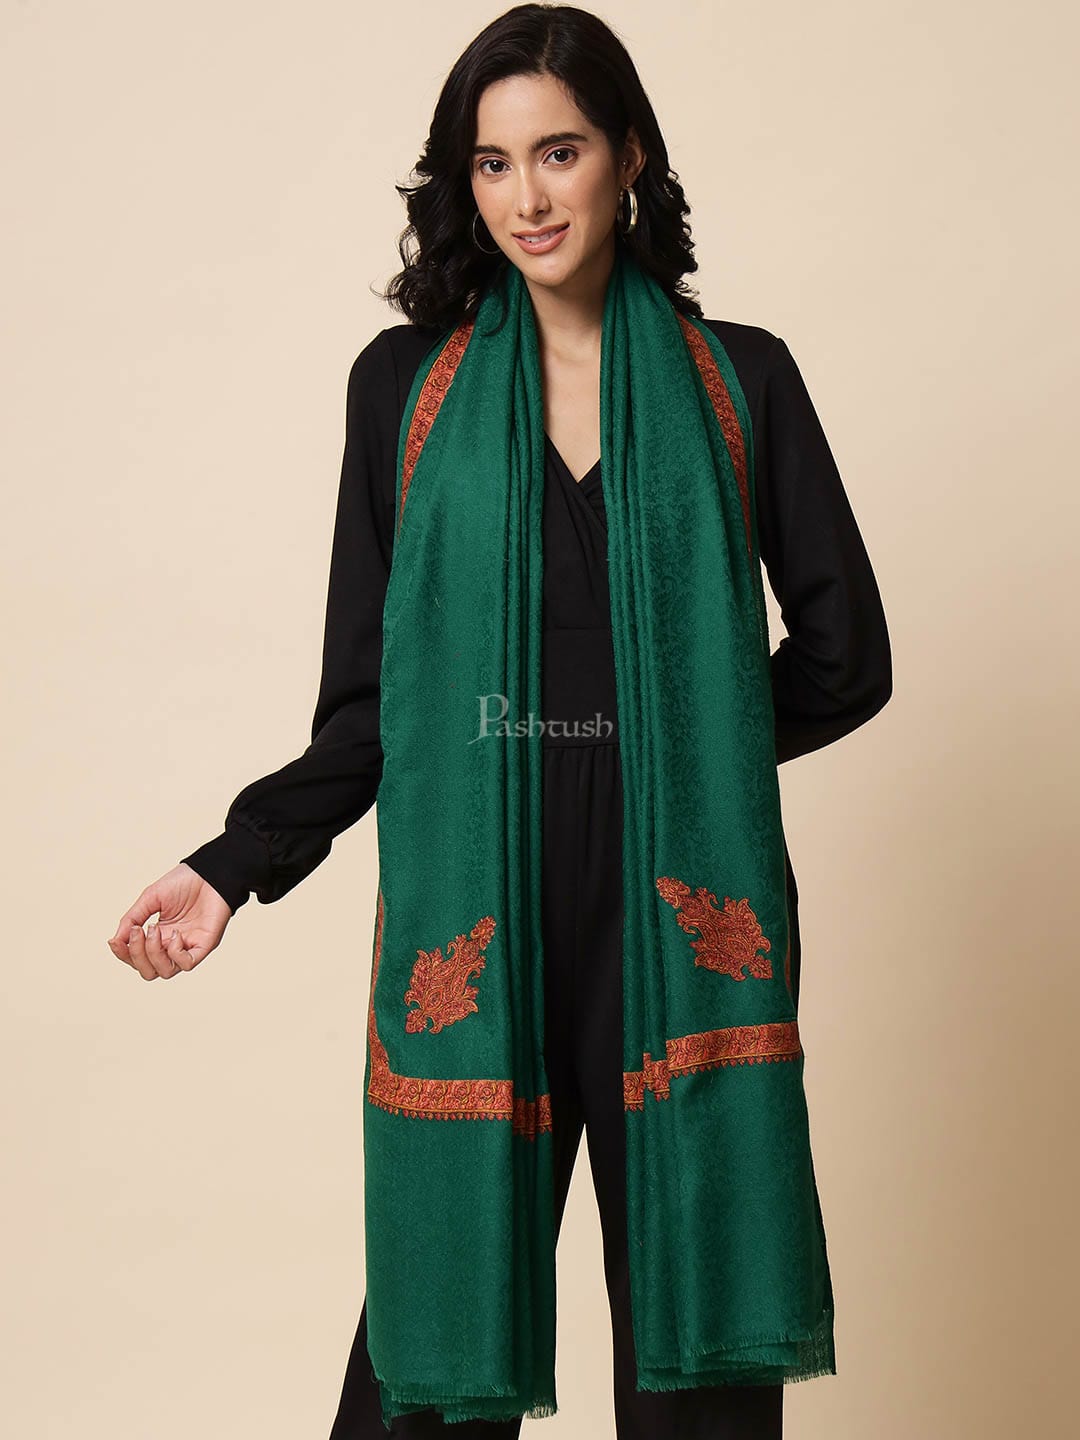 Pashtush womens Extra Fine Wool shawl, multi kingri embroidery design ...